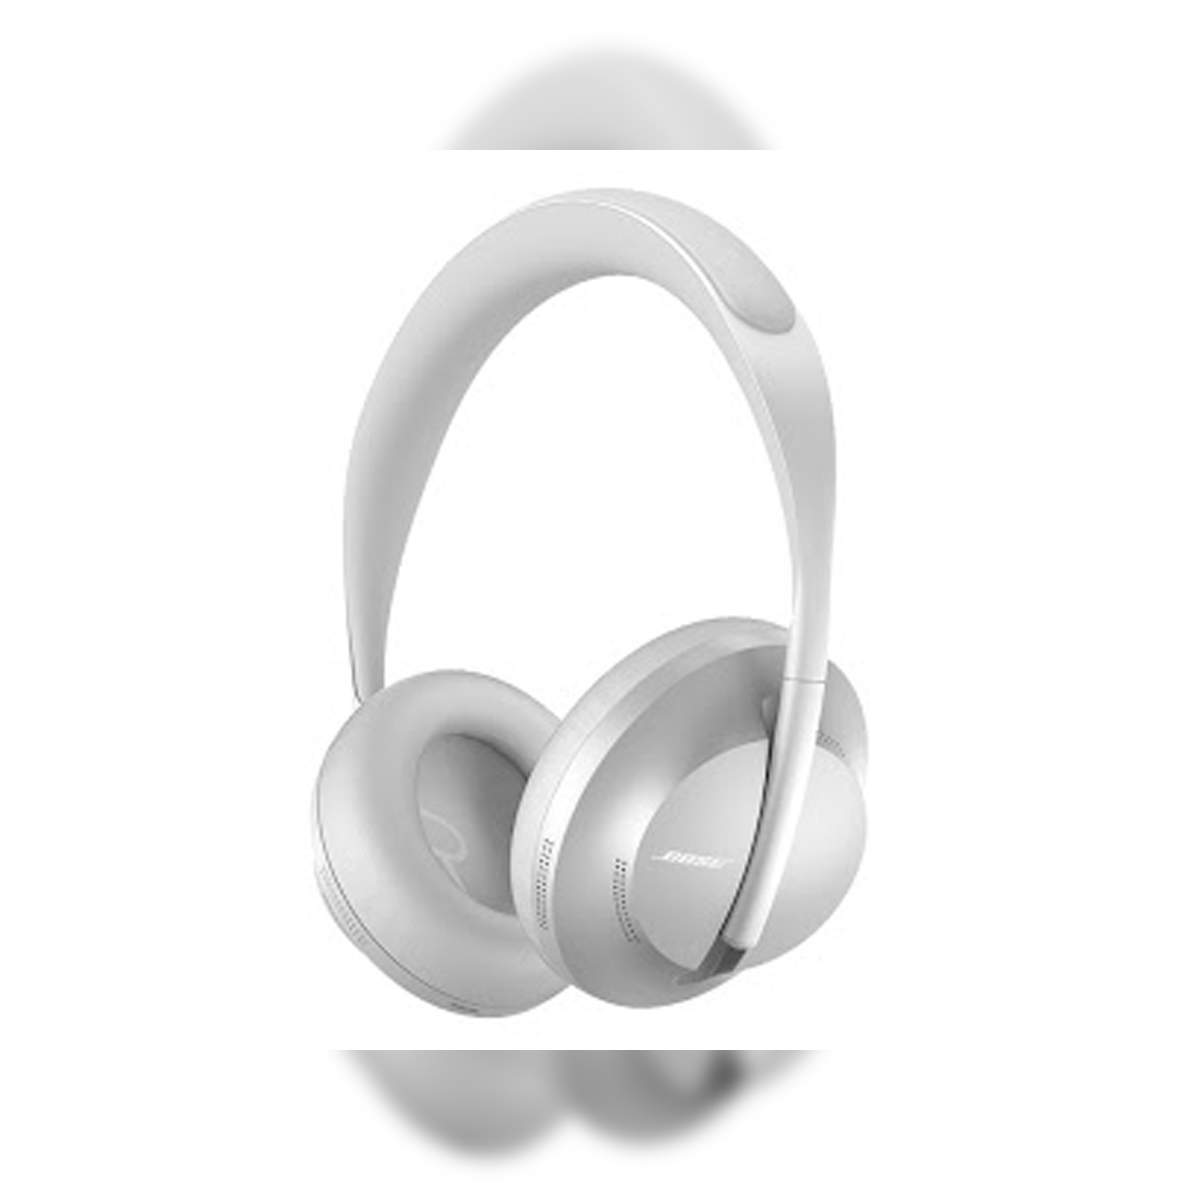 Bose Headphones 700 review: Bose Noise Cancelling Headphones